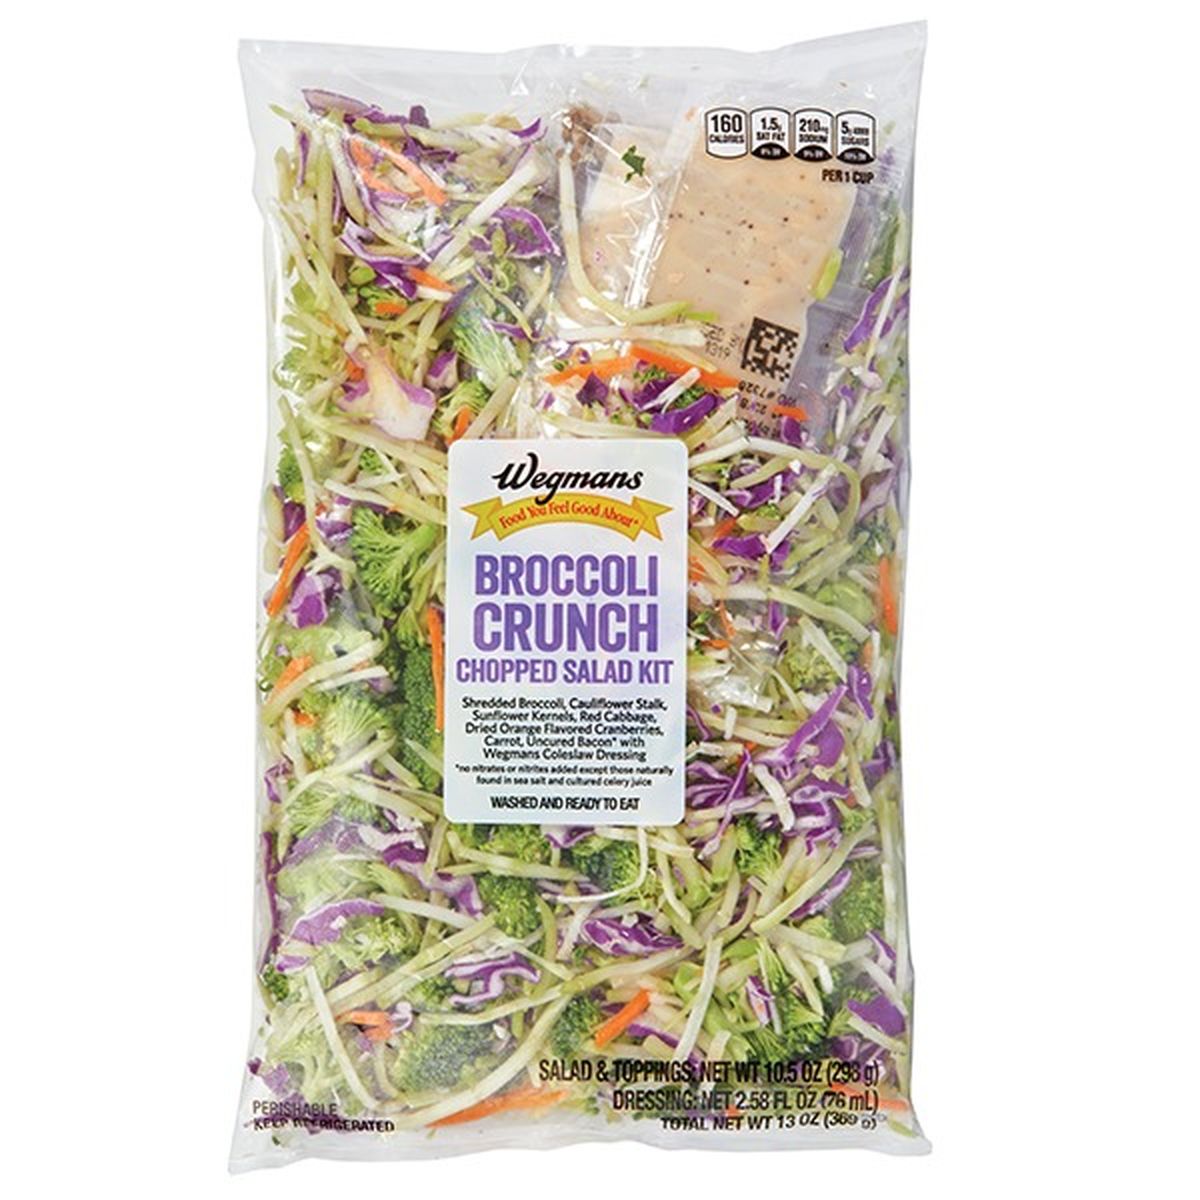 Calories in Wegmans Special Blends Broccoli CrunchChopped Salad Kit